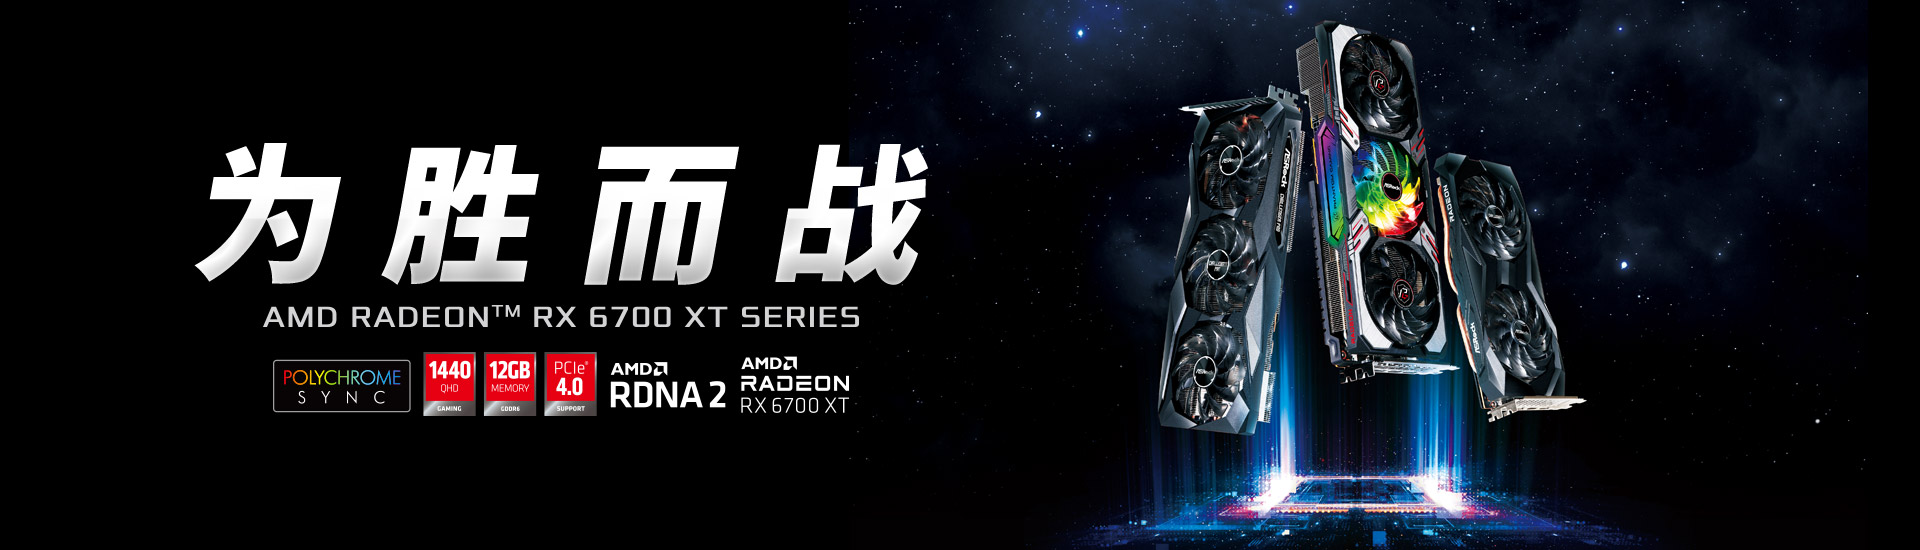 AMD Radeon RX 6700 XT Series